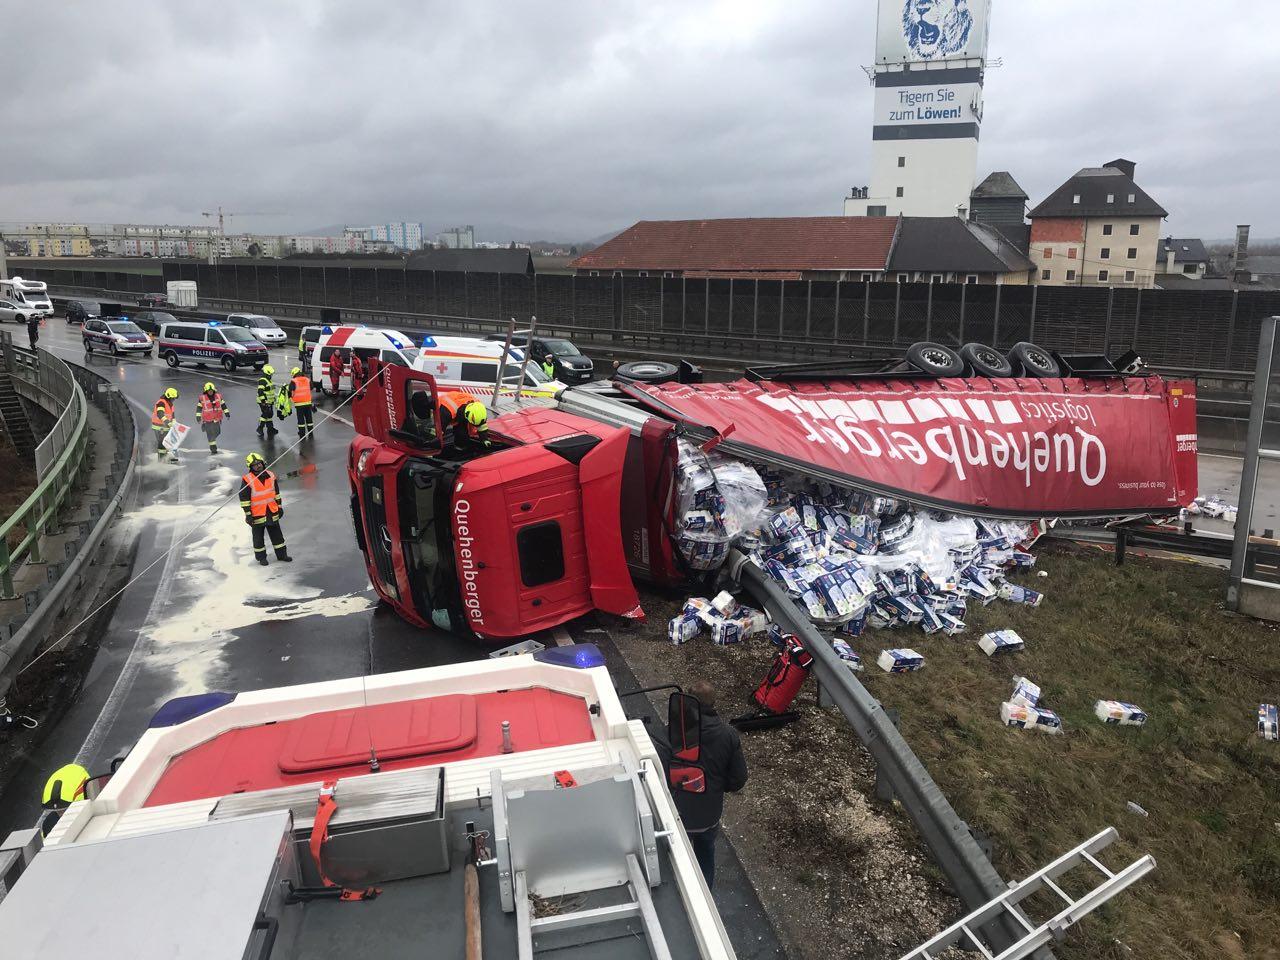 Lkw-Unfall Autobahn nach lkw-unfall stundenlang gesperrt